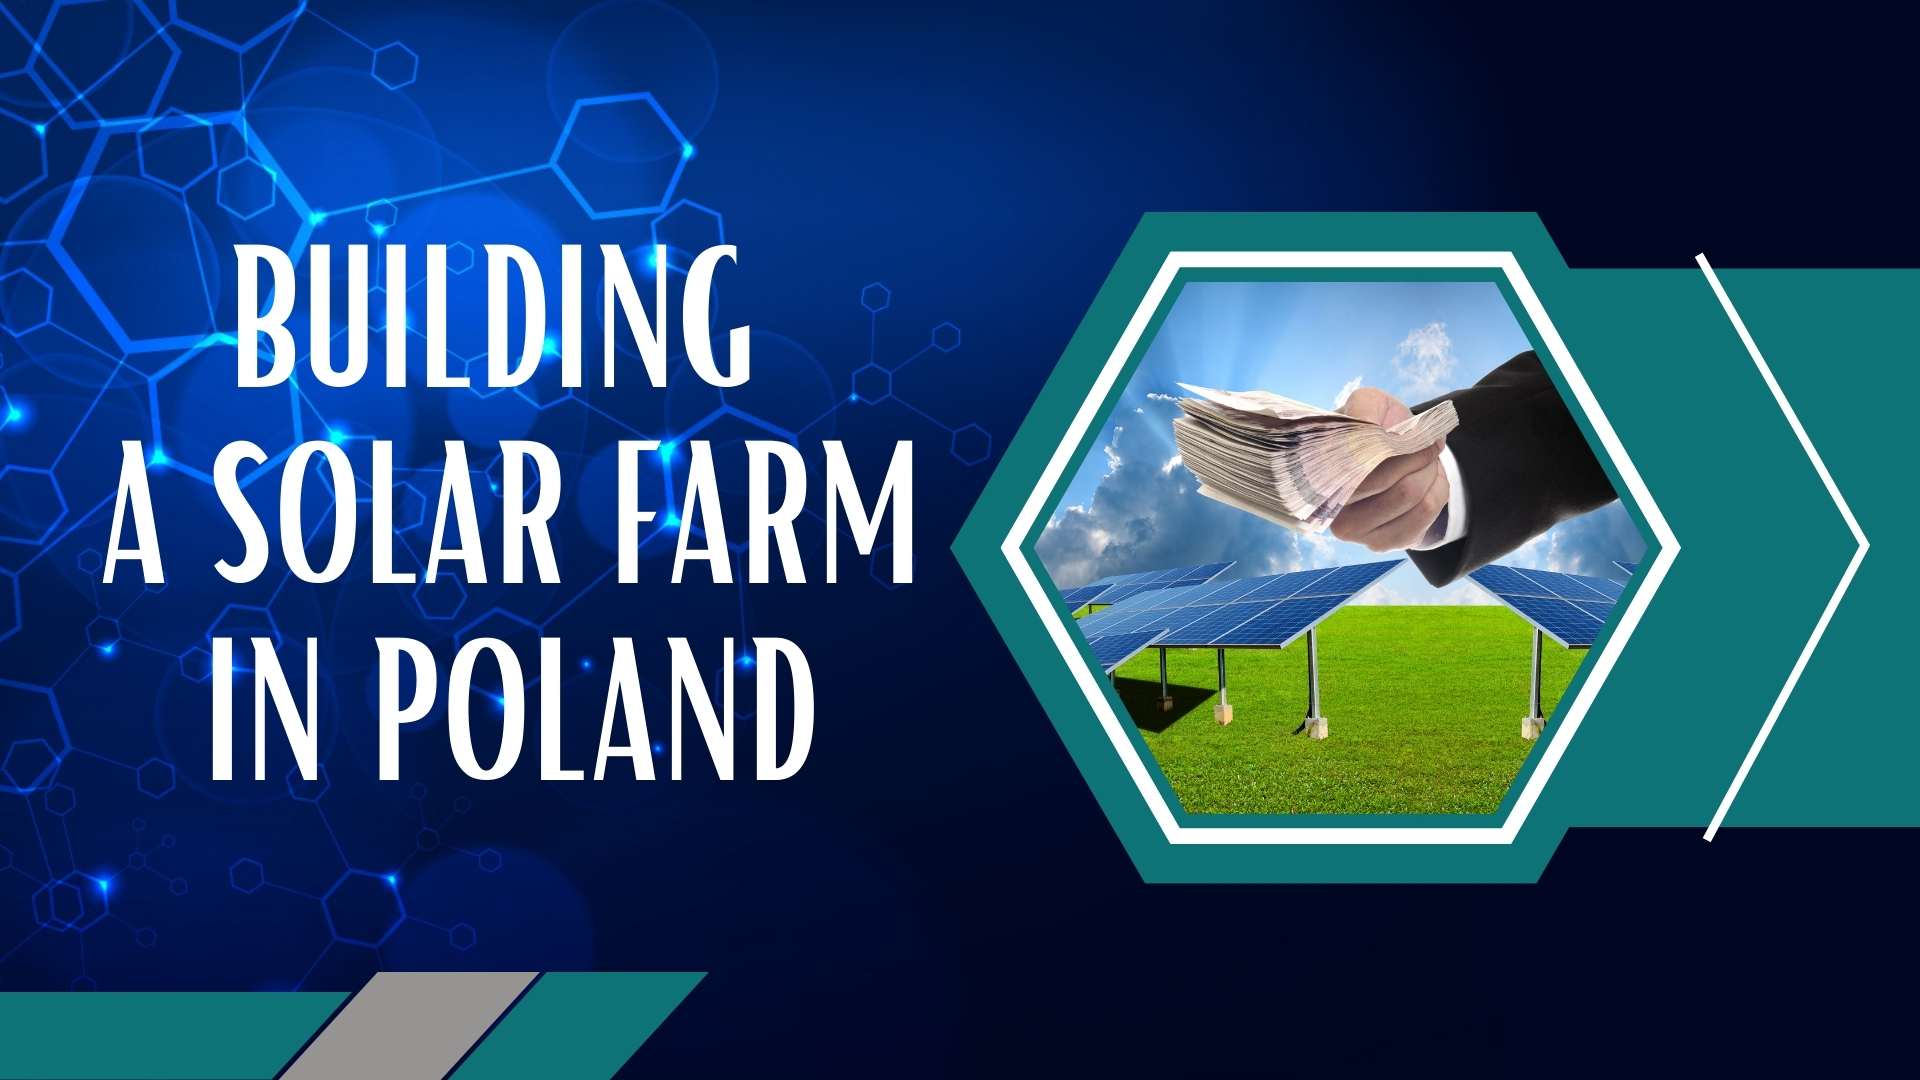 Building a solar farm in Poland